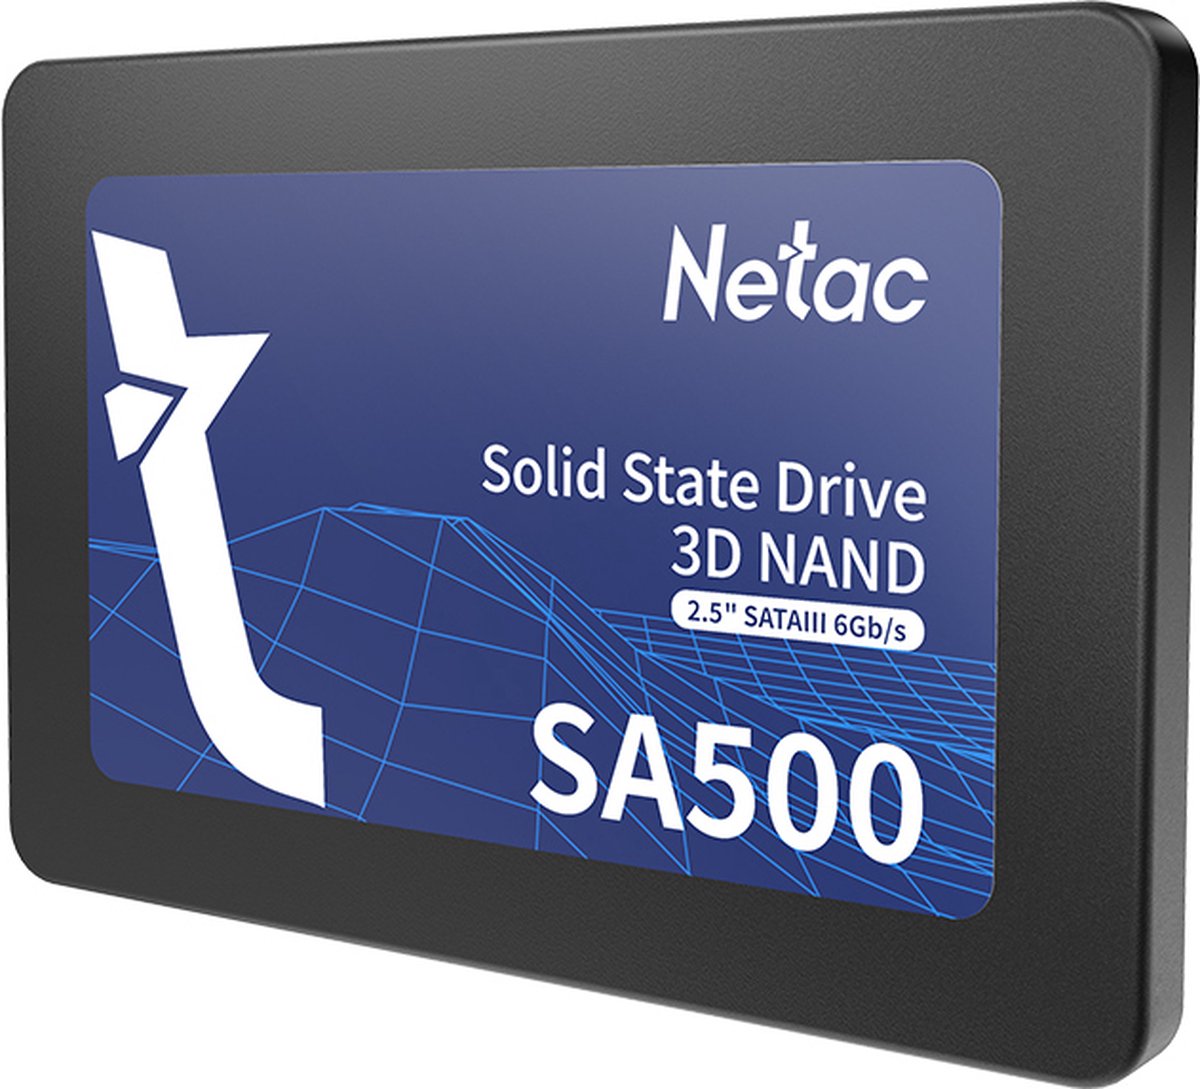 Netac SA500 2.5 SATAIII 3D NAND SSD 480GB, R/W up to 520/450MB/s